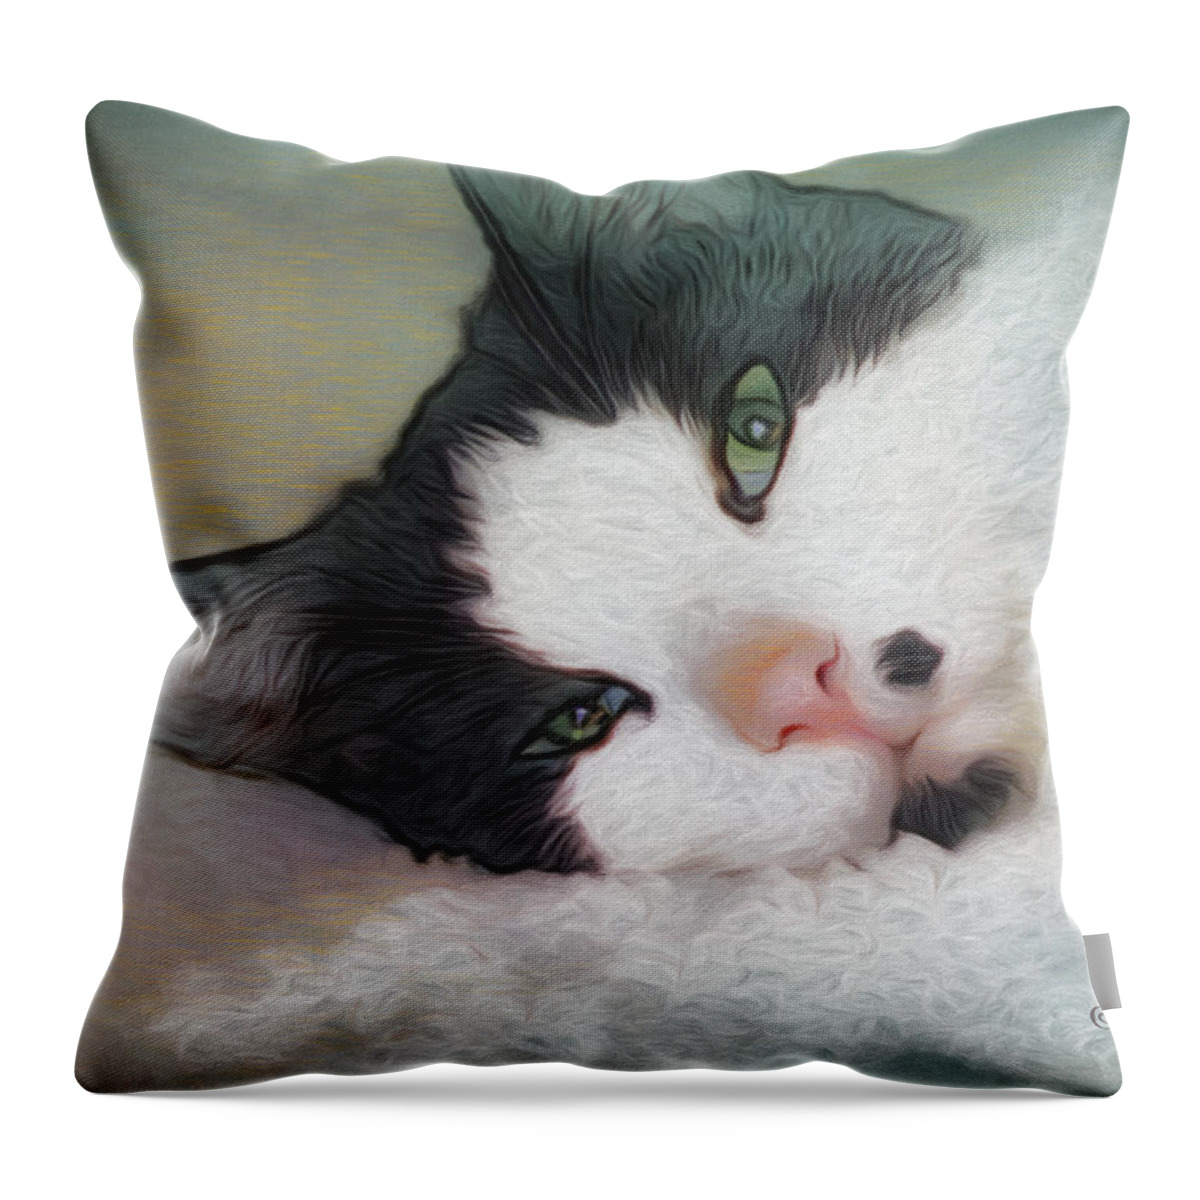 Green Eyed Cat Throw Pillow featuring the photograph Green Eyed Cat - Sleepy Kitty by Rebecca Korpita